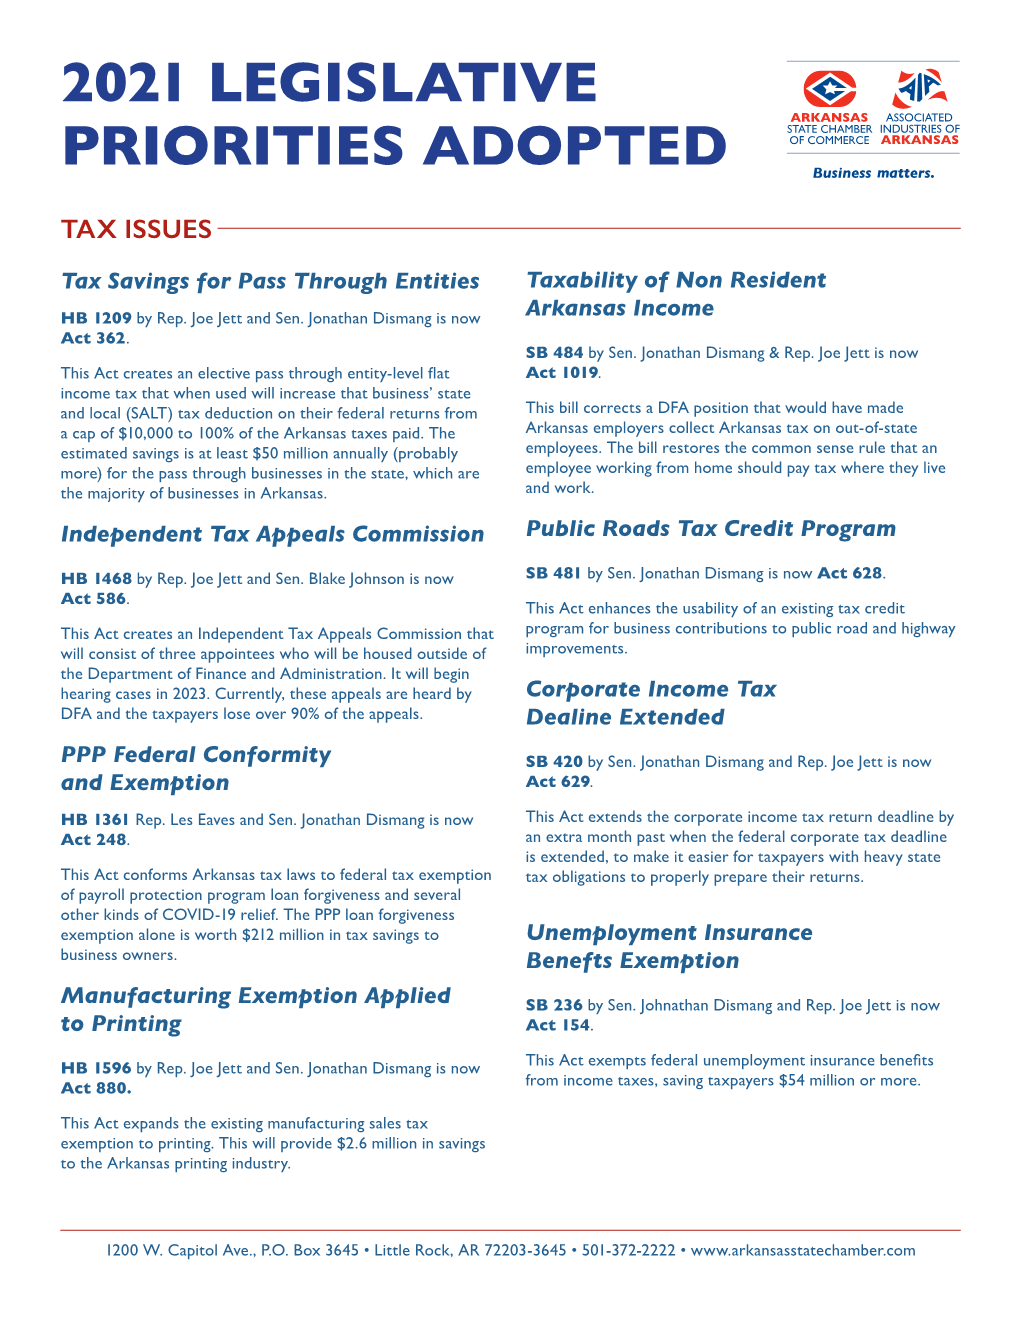 2021 State Chamber/AIA Legislative Priorities Adopted